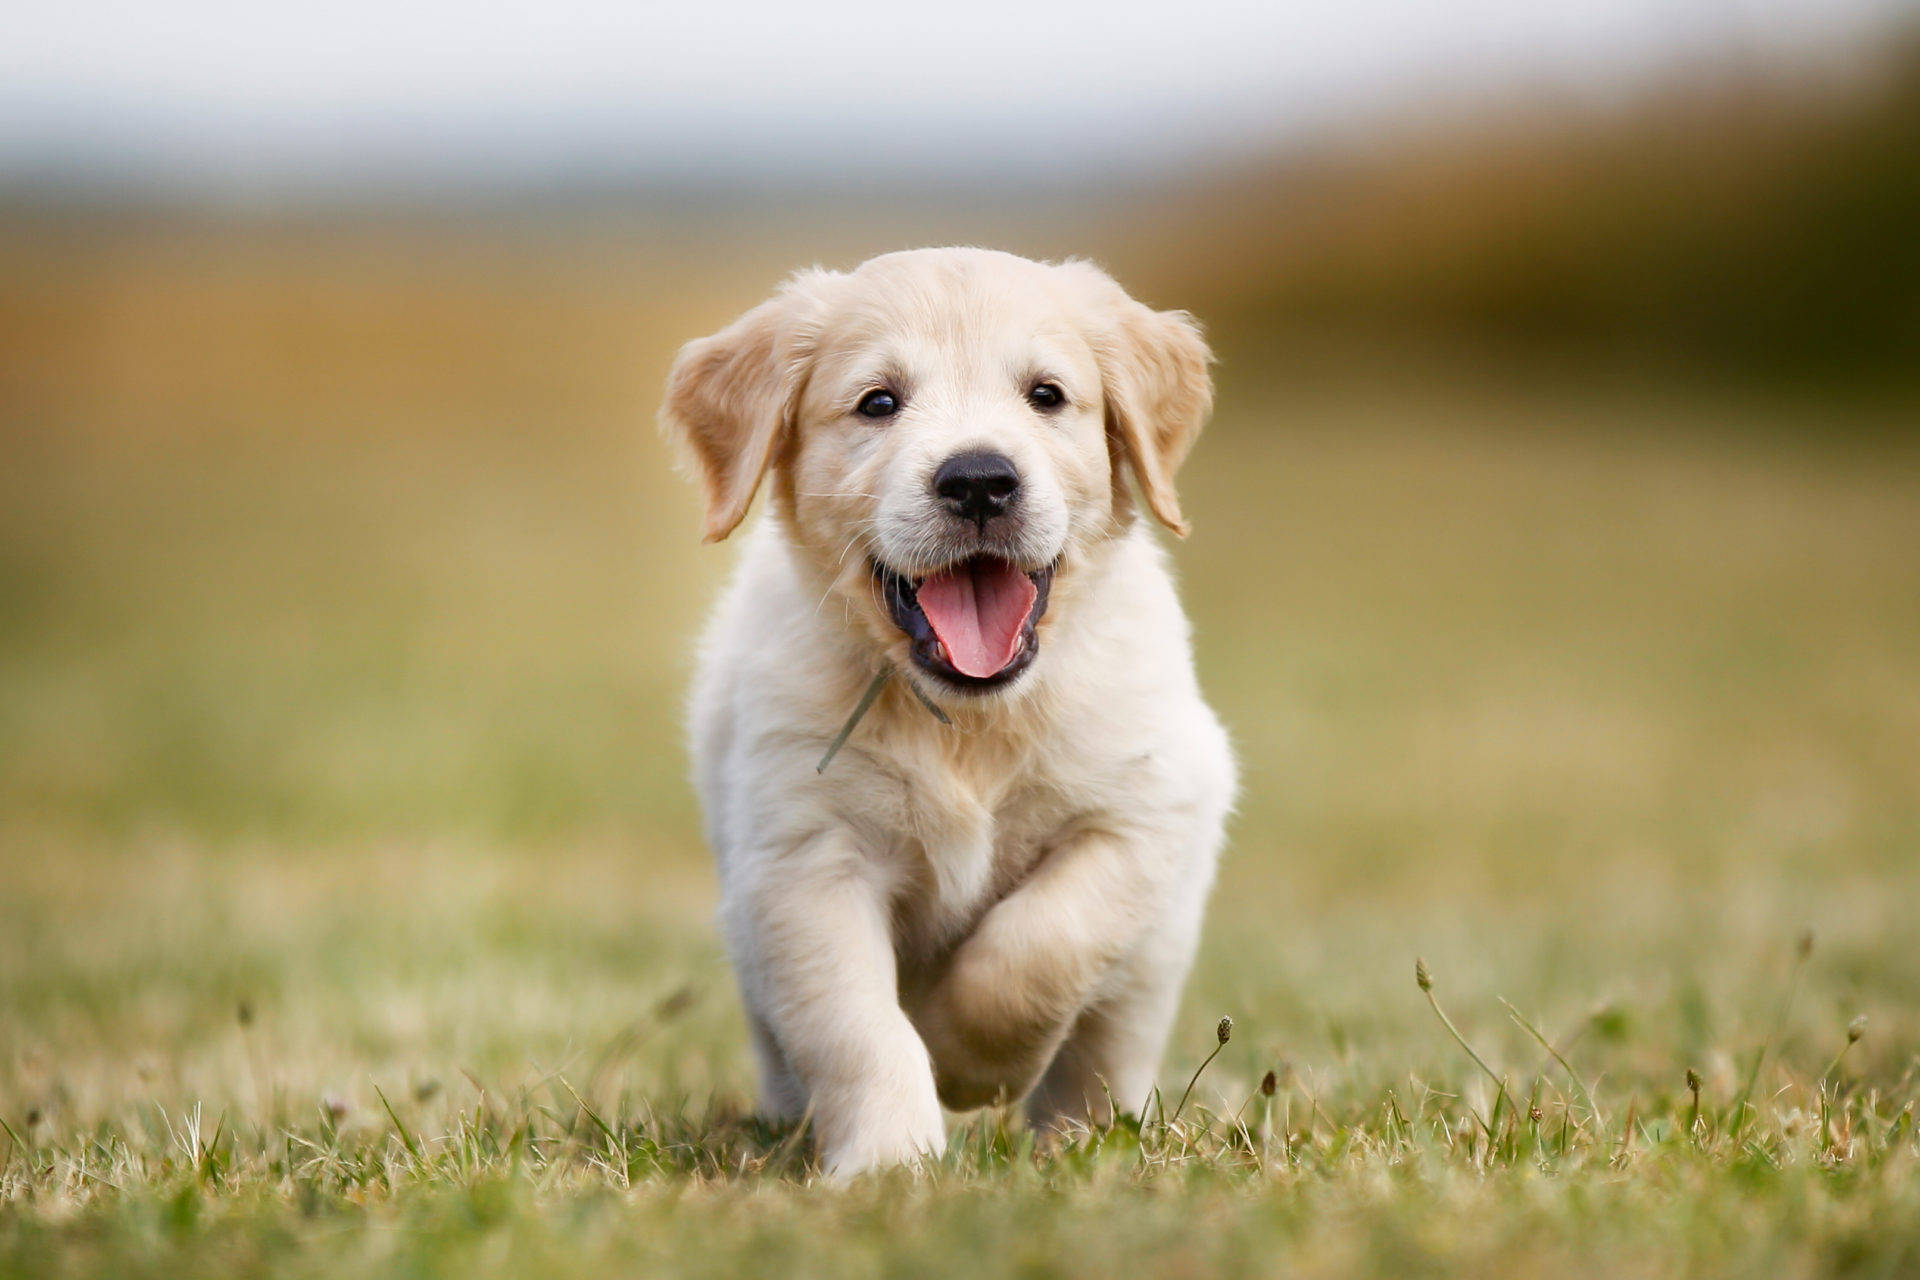 Adorable Puppy Joyfully Running Outdoors